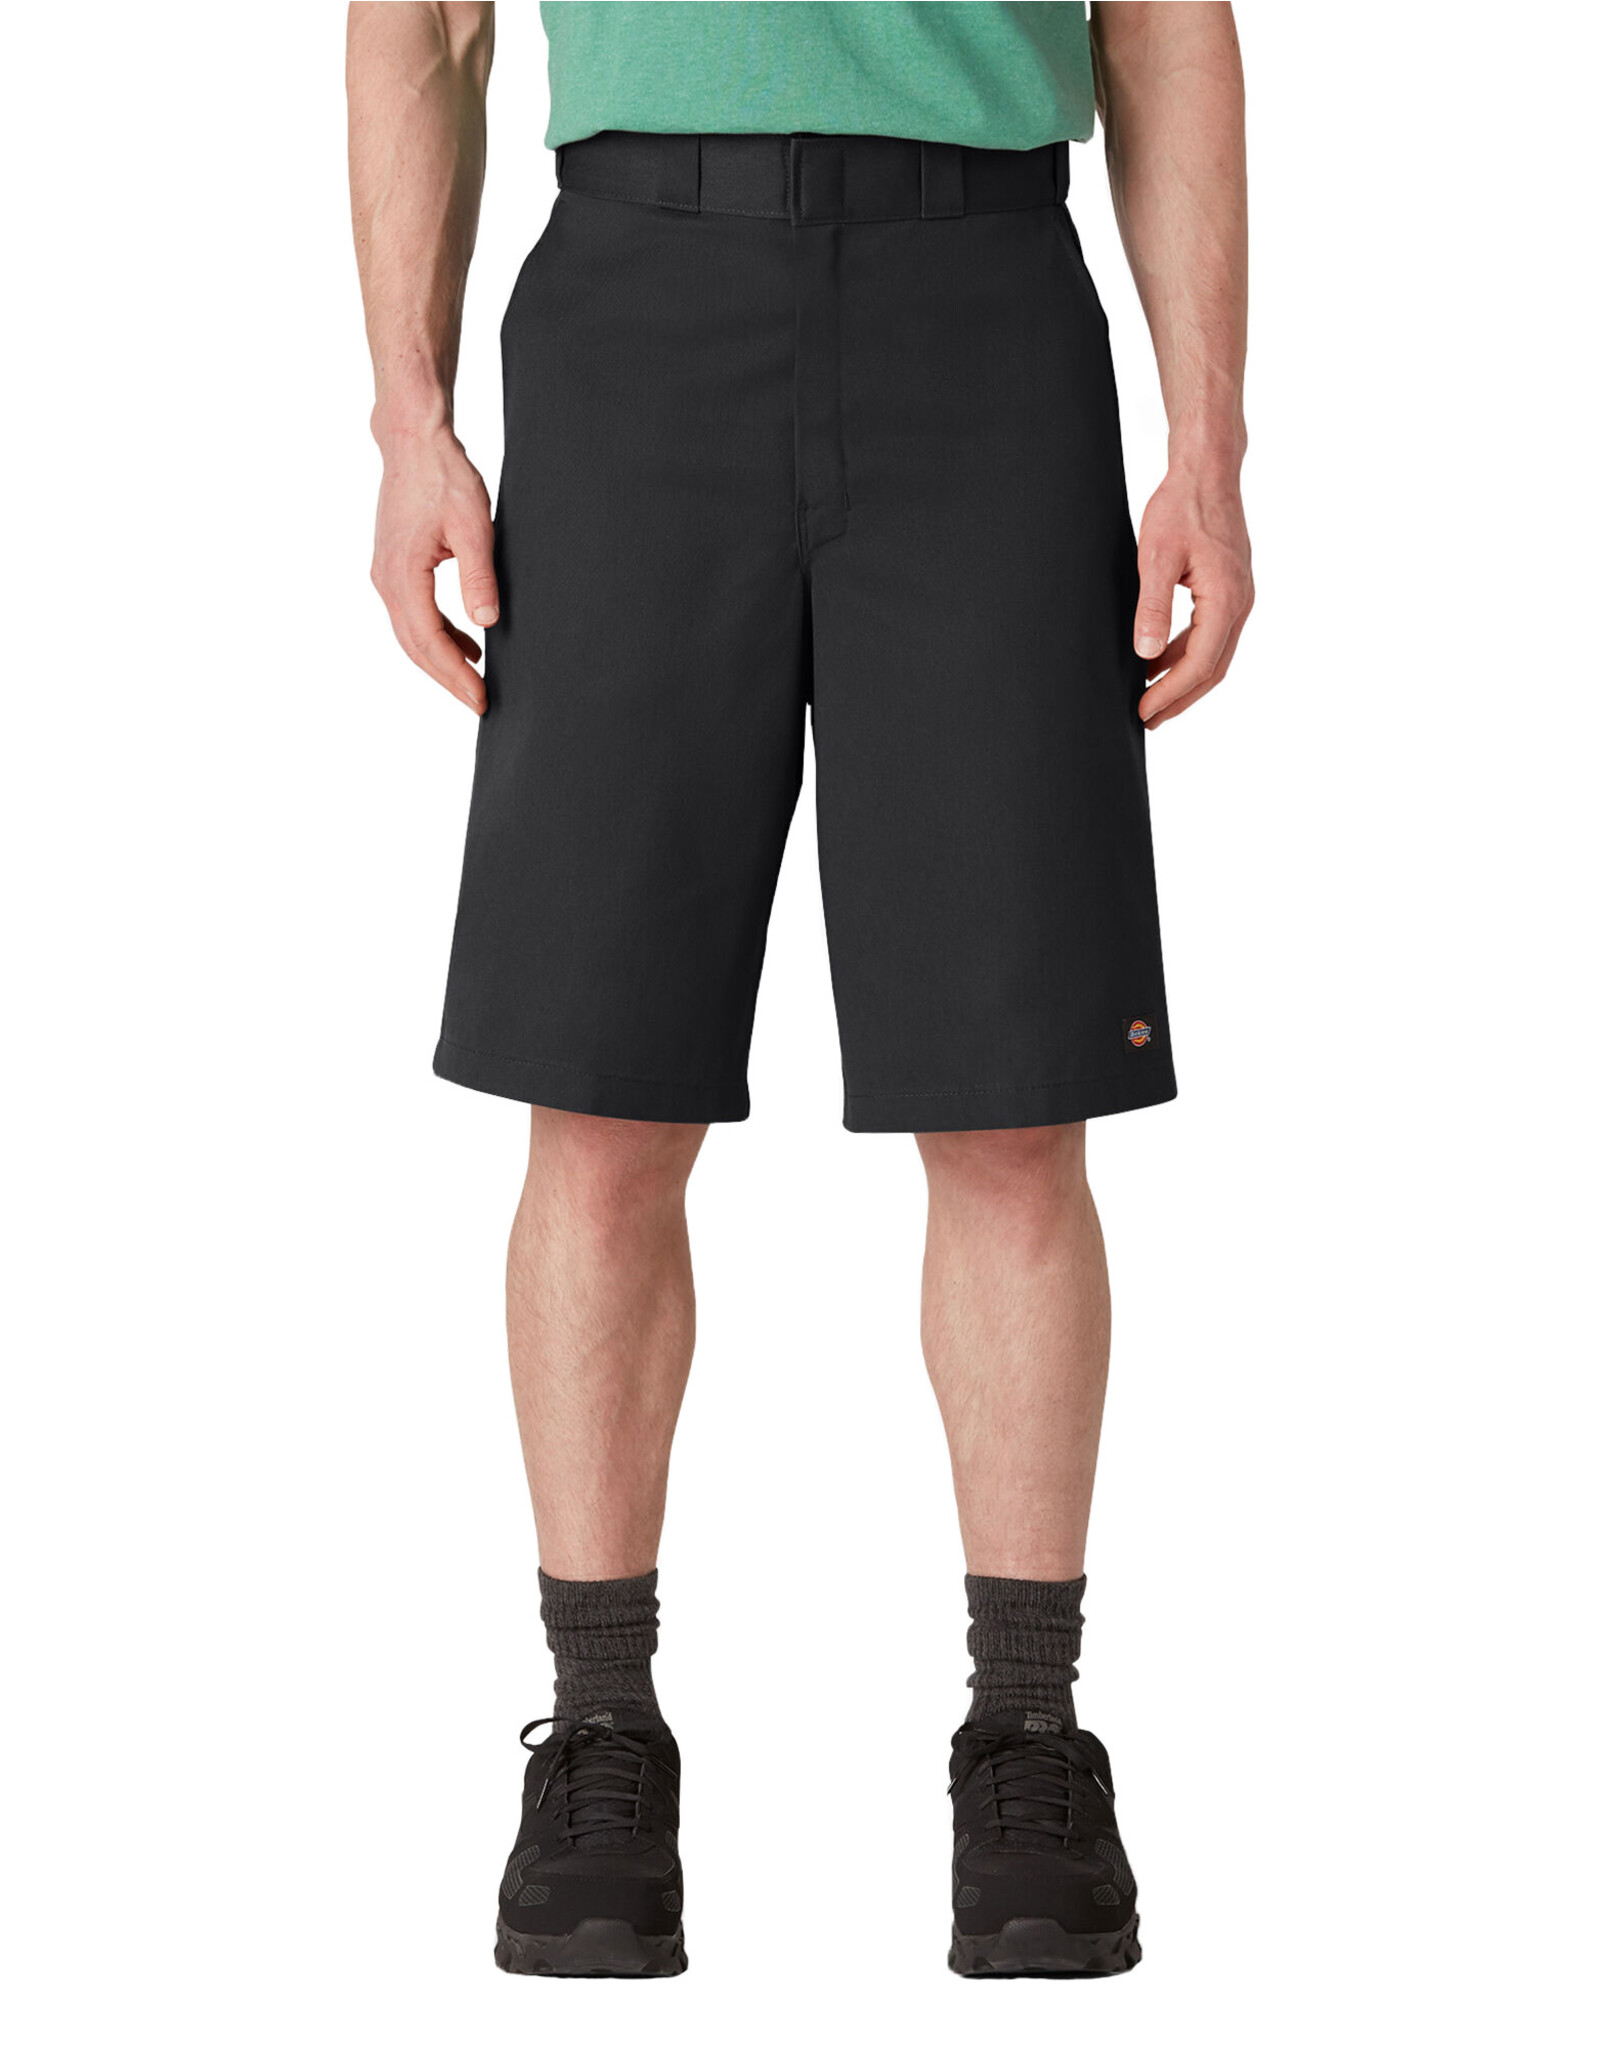 DICKIES Loose Fit Flat Front Work Shorts, 13" Black - 42283BK